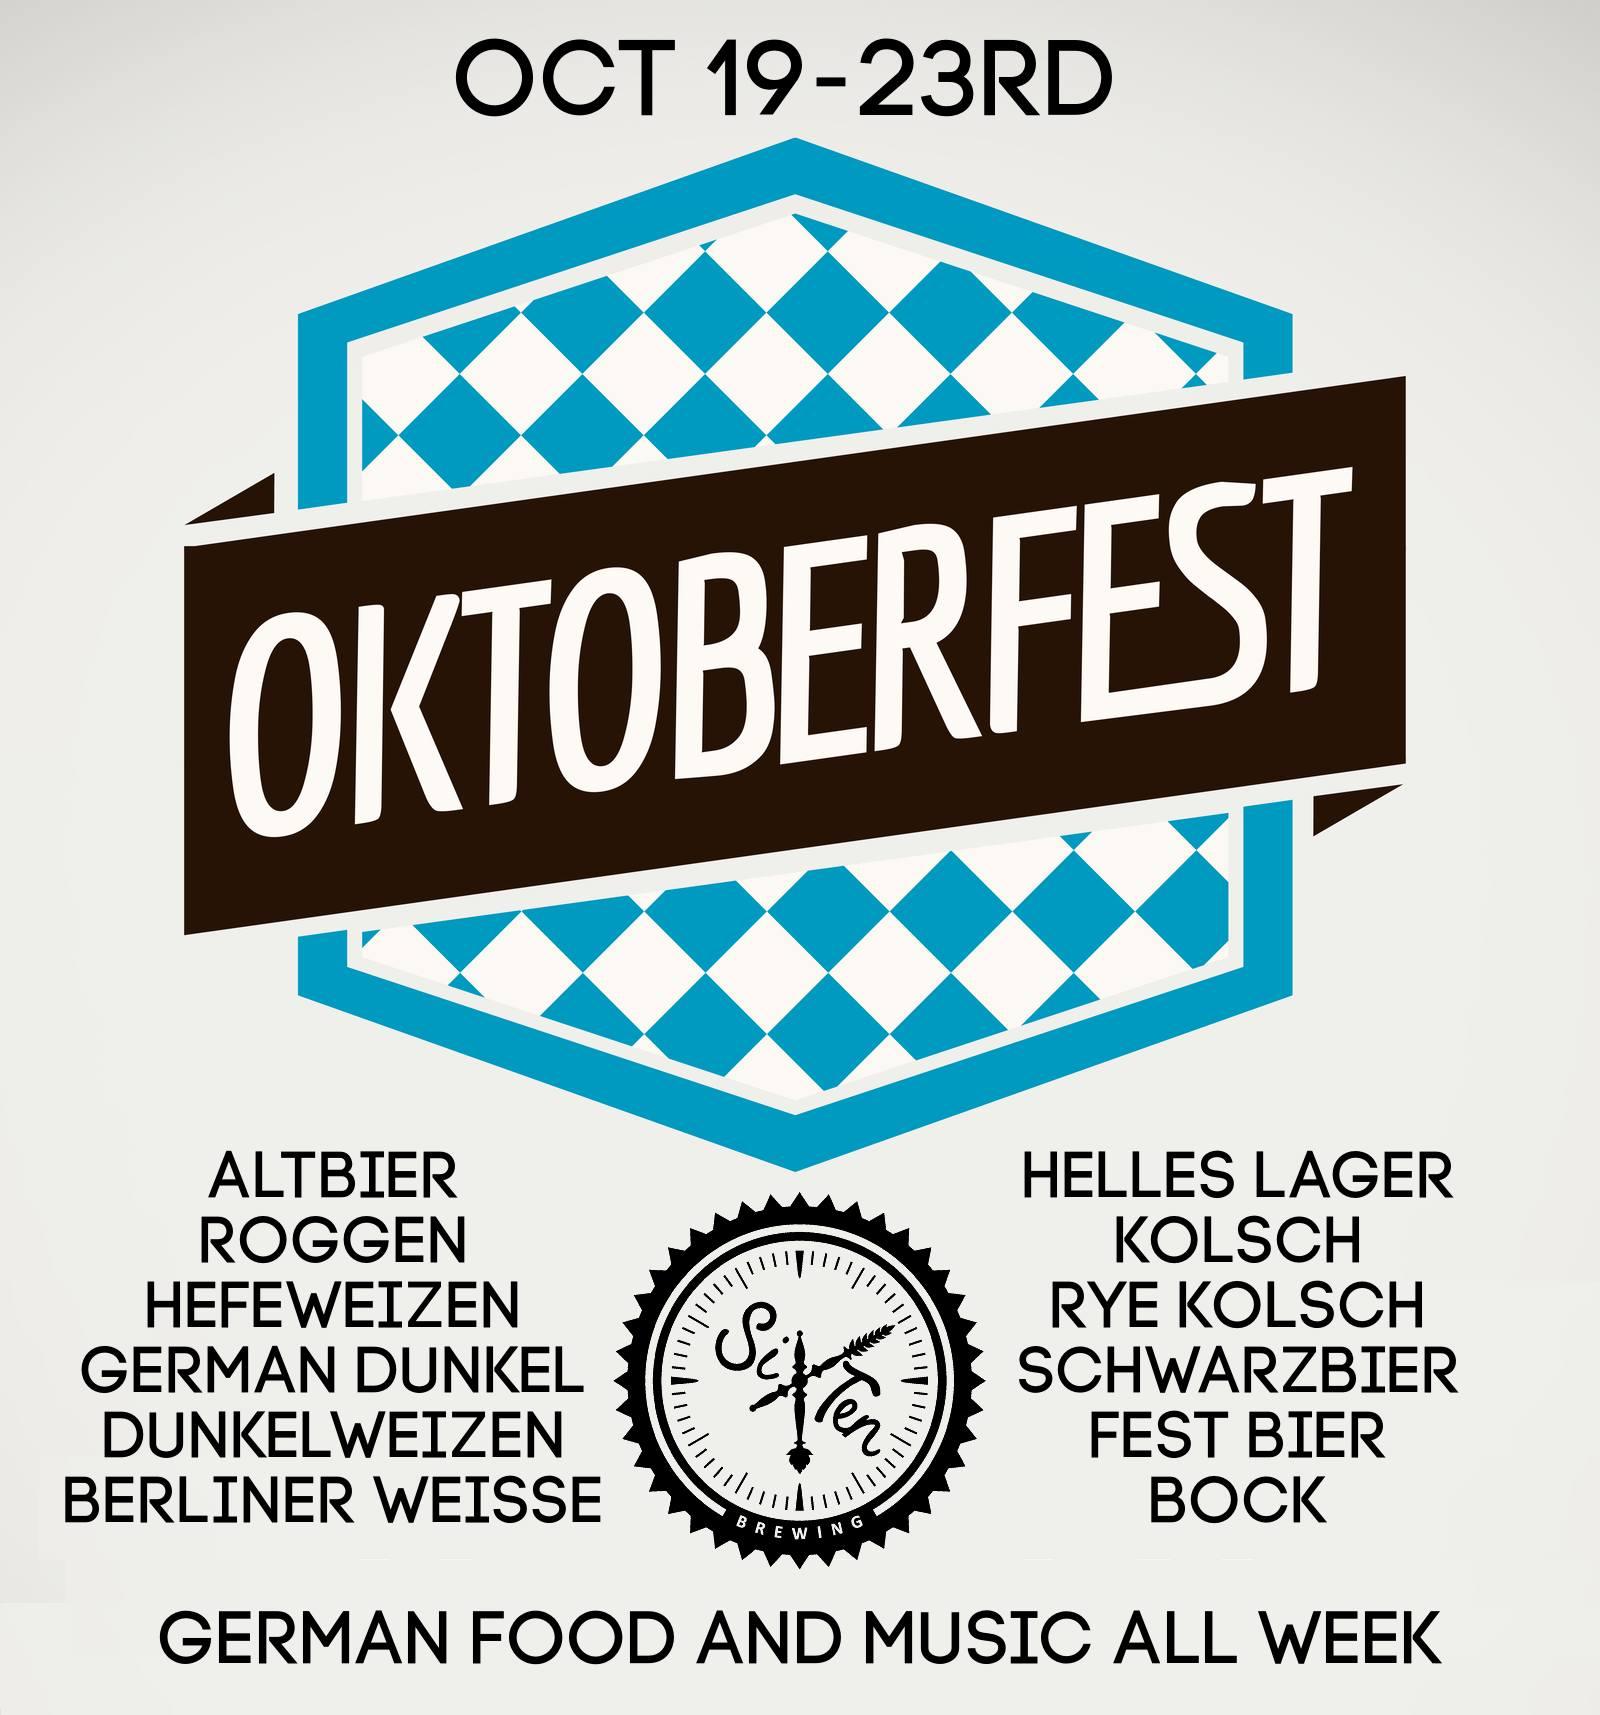 Oktoberfest at Six Ten Brewing
Wed Oct 19, 3:00 PM - Sun Oct 23, 9:00 PM